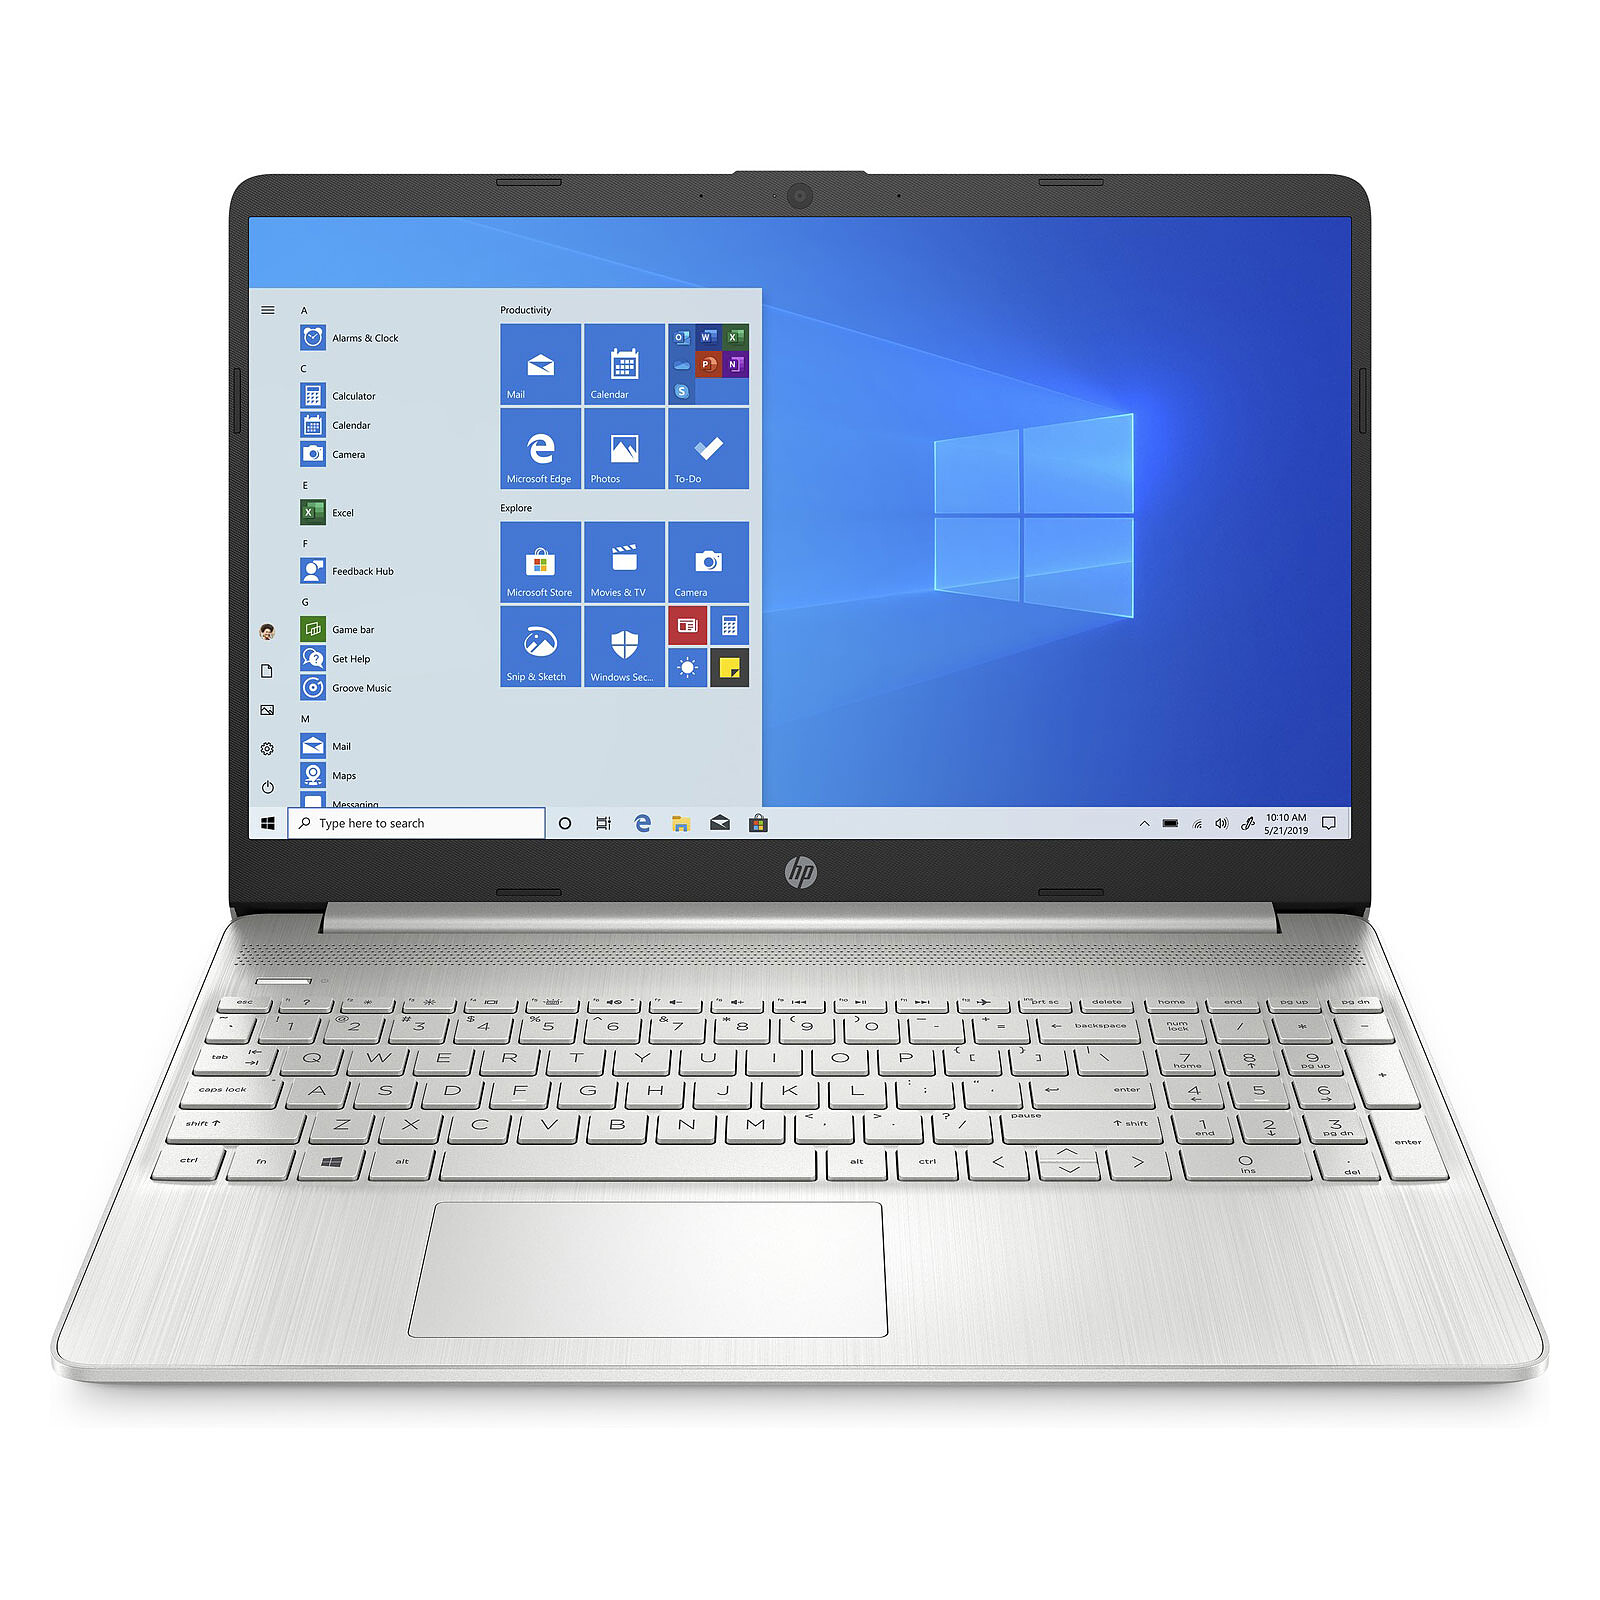 HP 15s-du3560TU i3-1125G4 8GB RAM 15.6" FHD Laptop in Sri Lanka | CyberDeals.lk - Ultimate Online Gadget Store in Sri Lanka